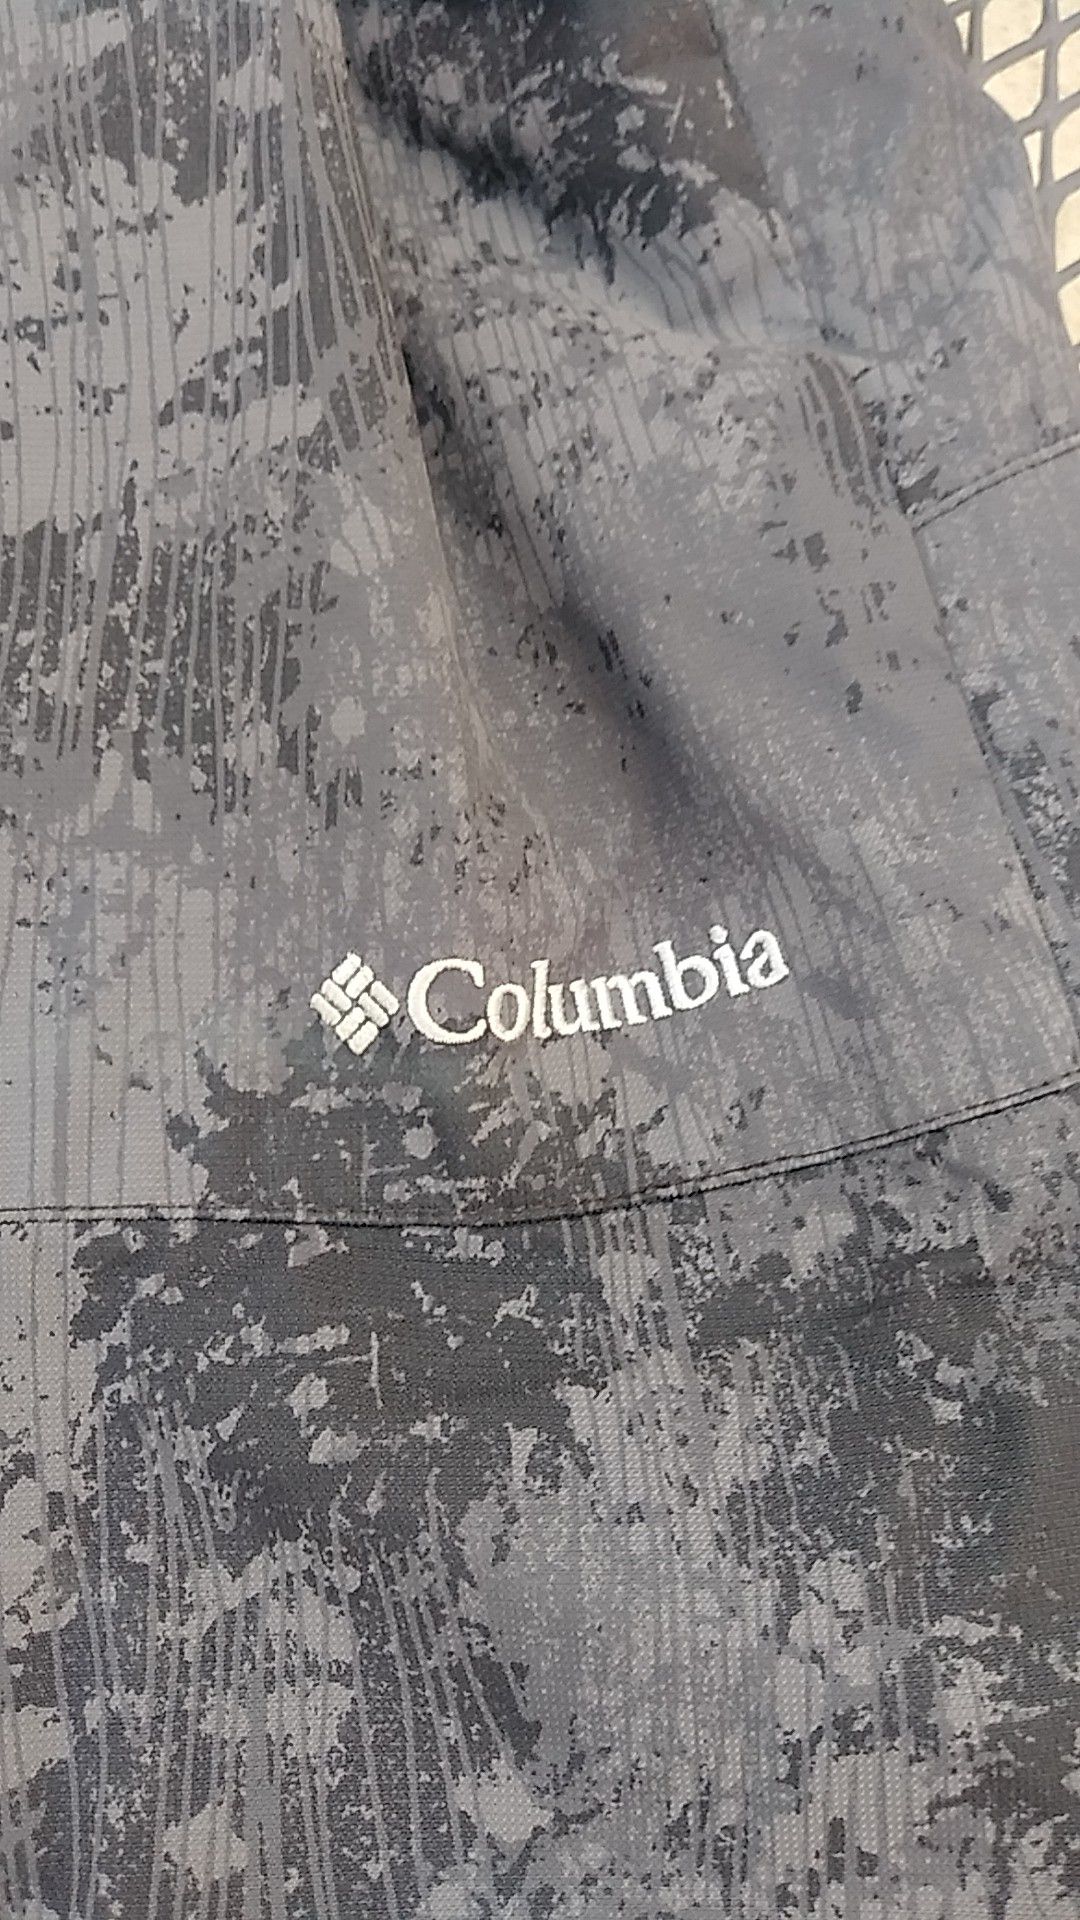 Columbia snow bib Overalls size 10/12. Slight stitching needed. Not ripped.